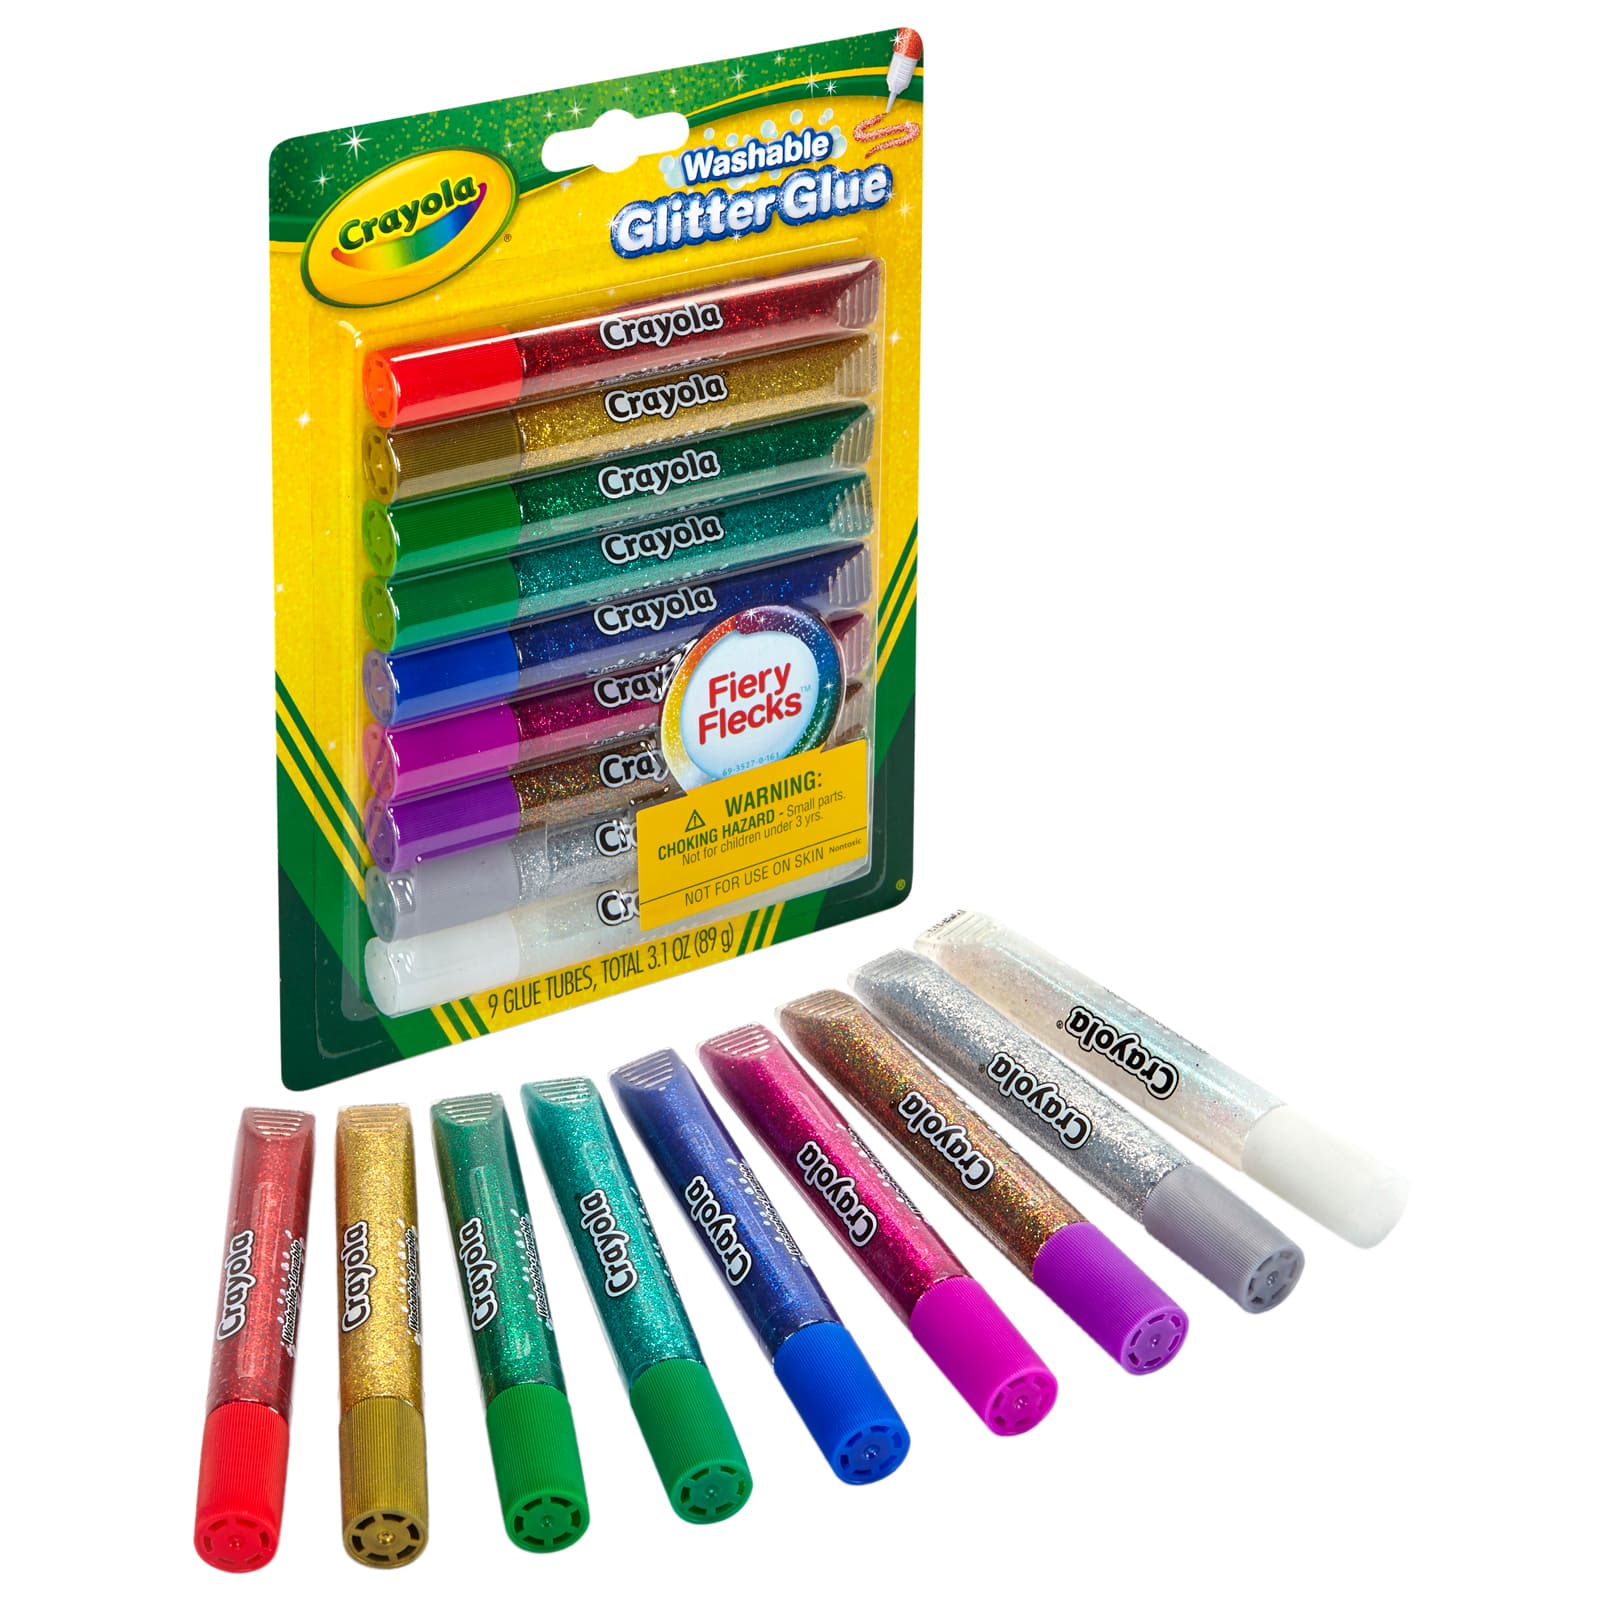 Crayola&#xAE; Bold Washable Glitter Glue with Fiery Flecks&#x2122;, 3 Packs of 9